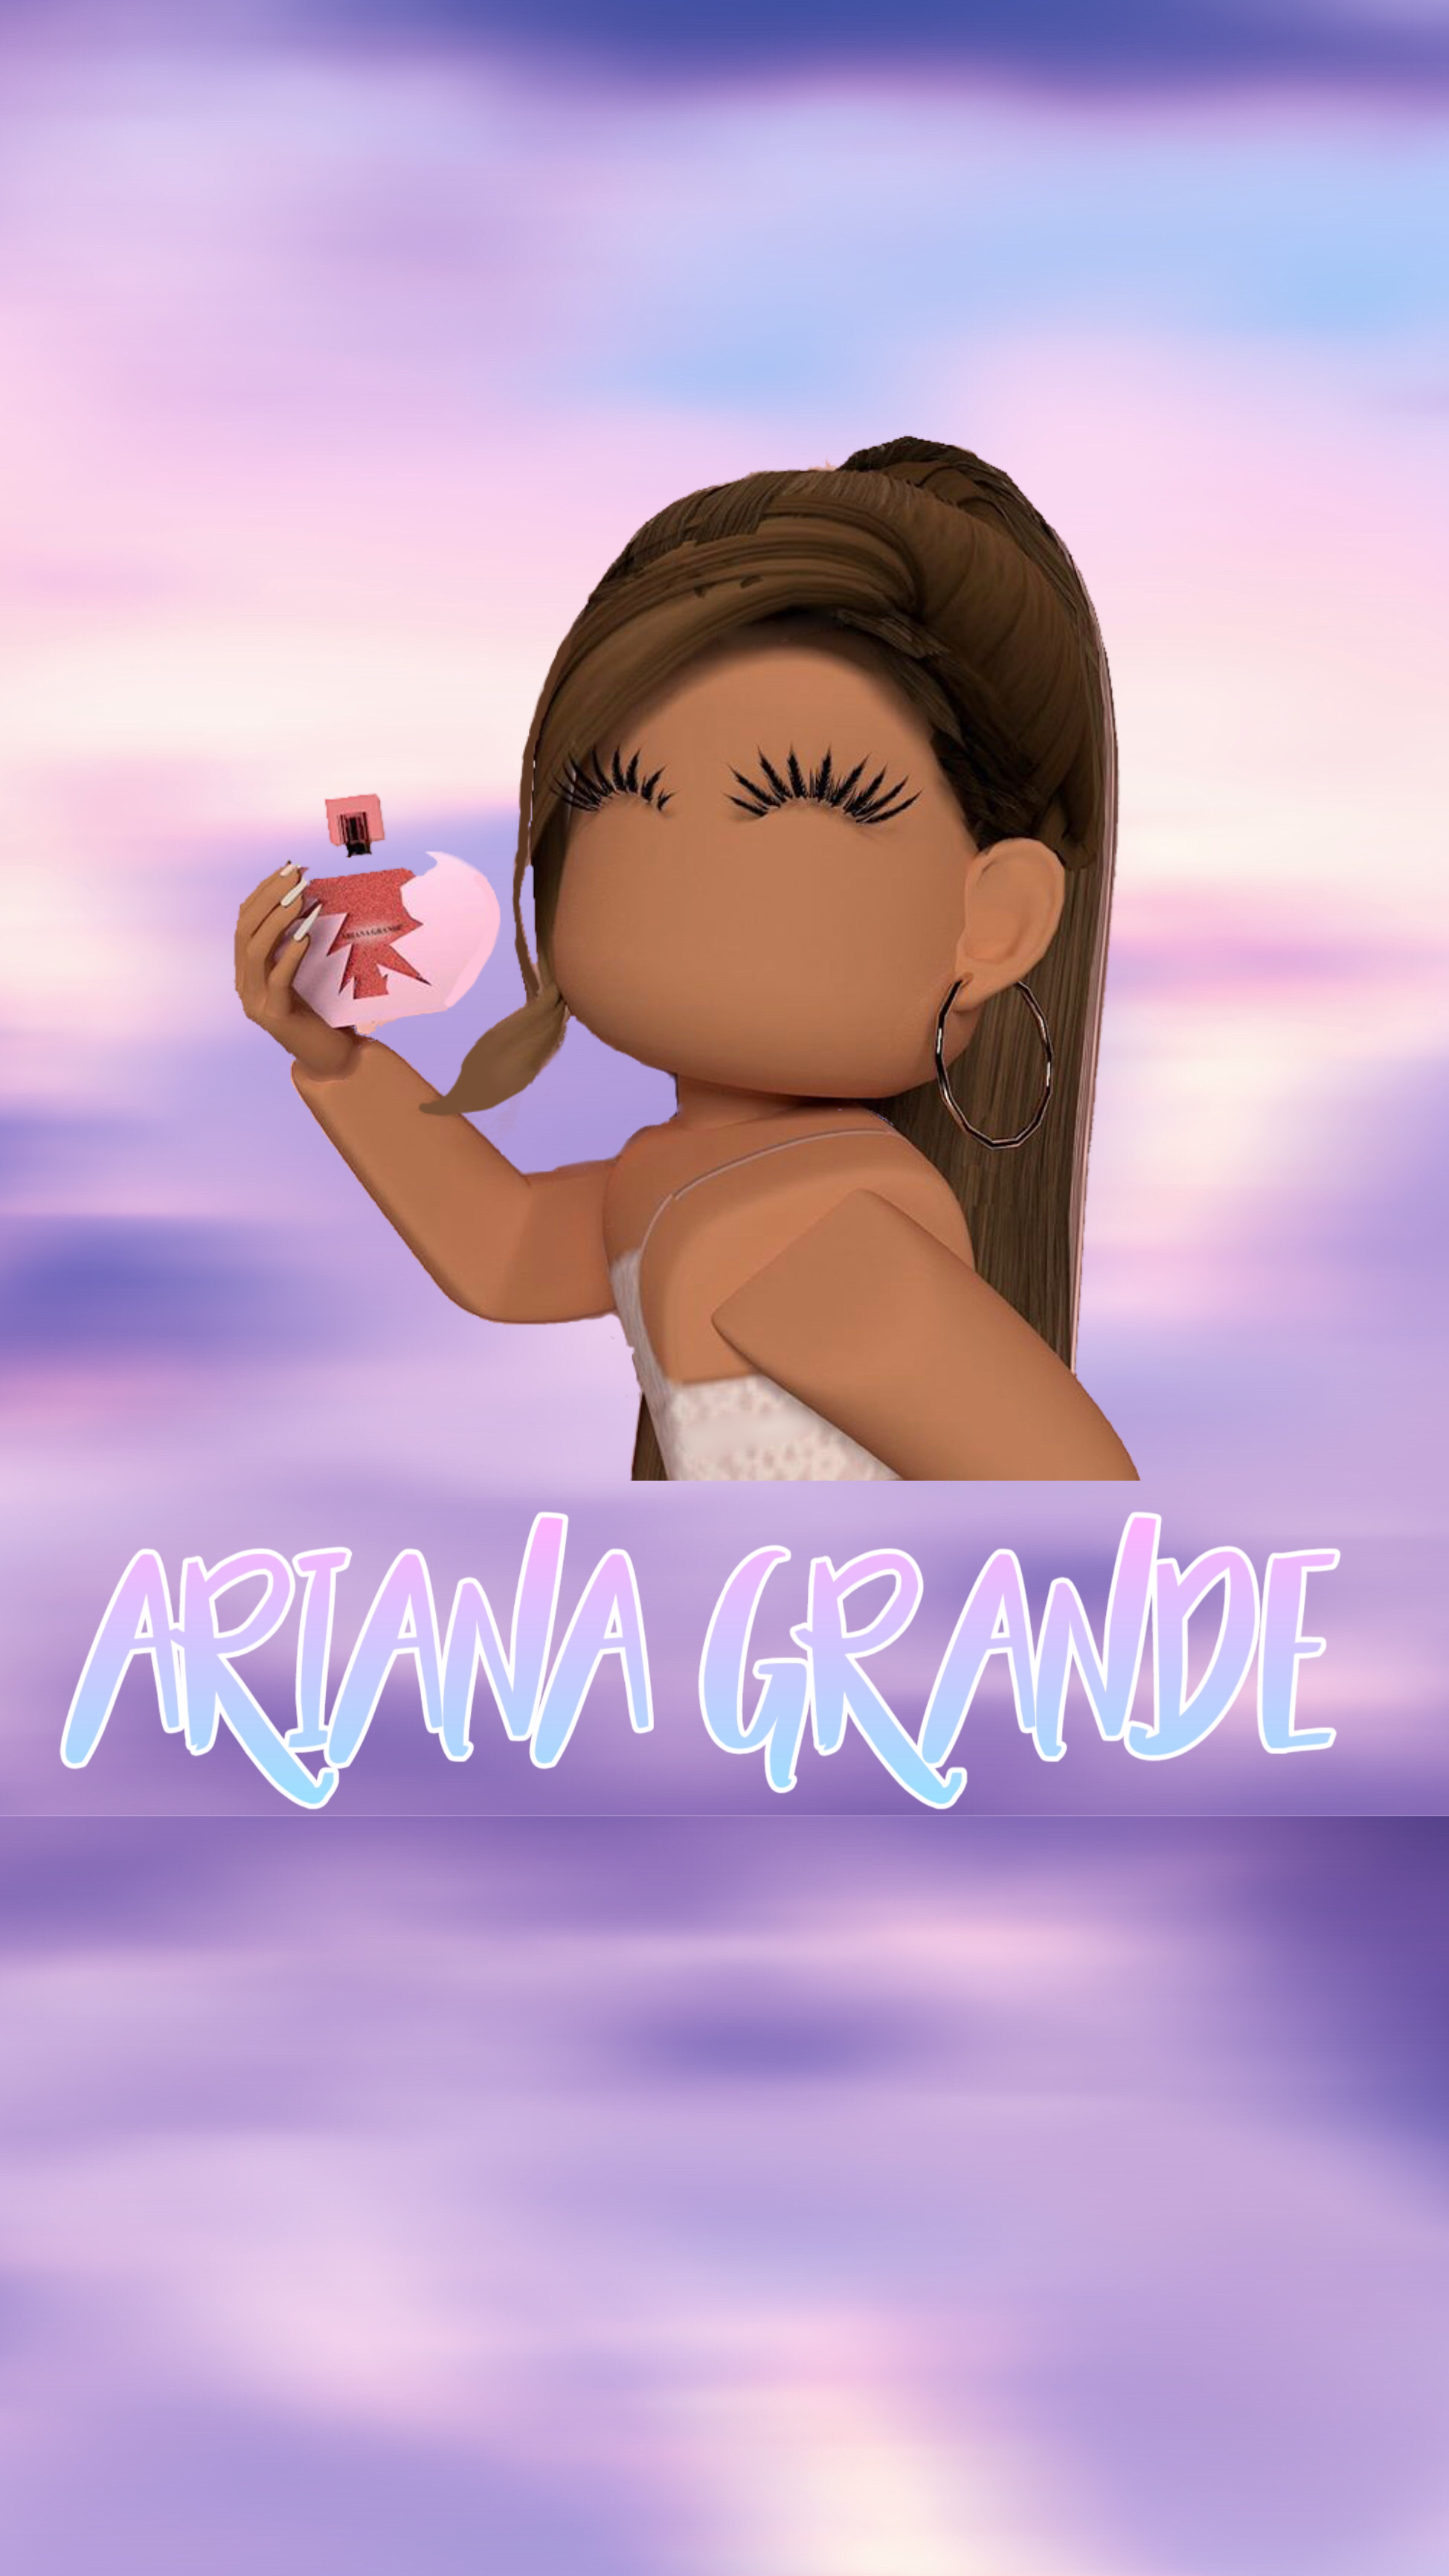 Roblox Arianagrande Ariana Image By 𝕃𝕠𝕧𝕝𝕖𝕪 - copying ariana grande roblox